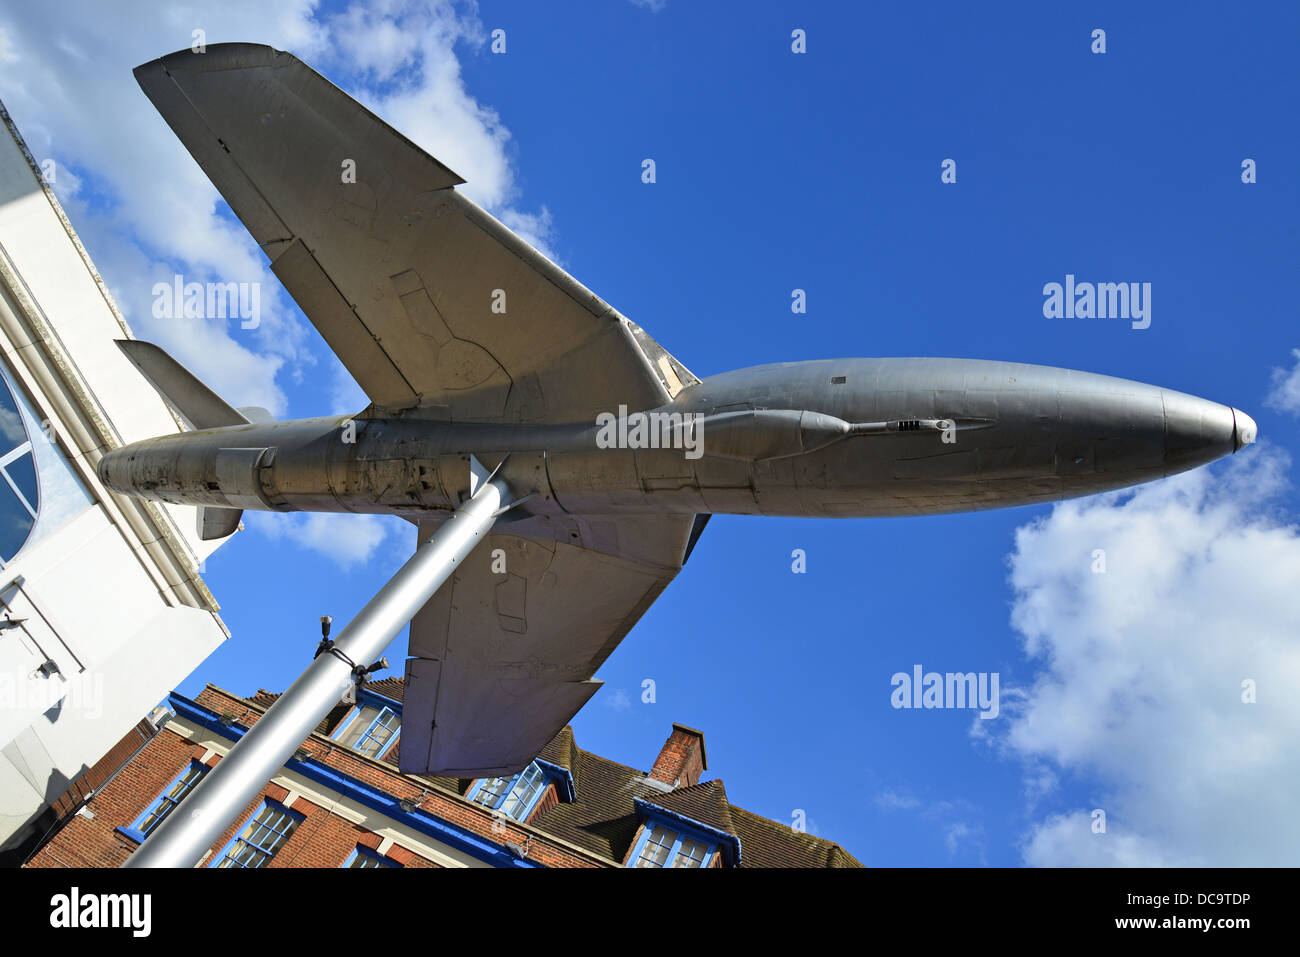 Hawker Hunter replica aircraft, Crown Square, Woking, Surrey, England, United Kingdom Stock Photo